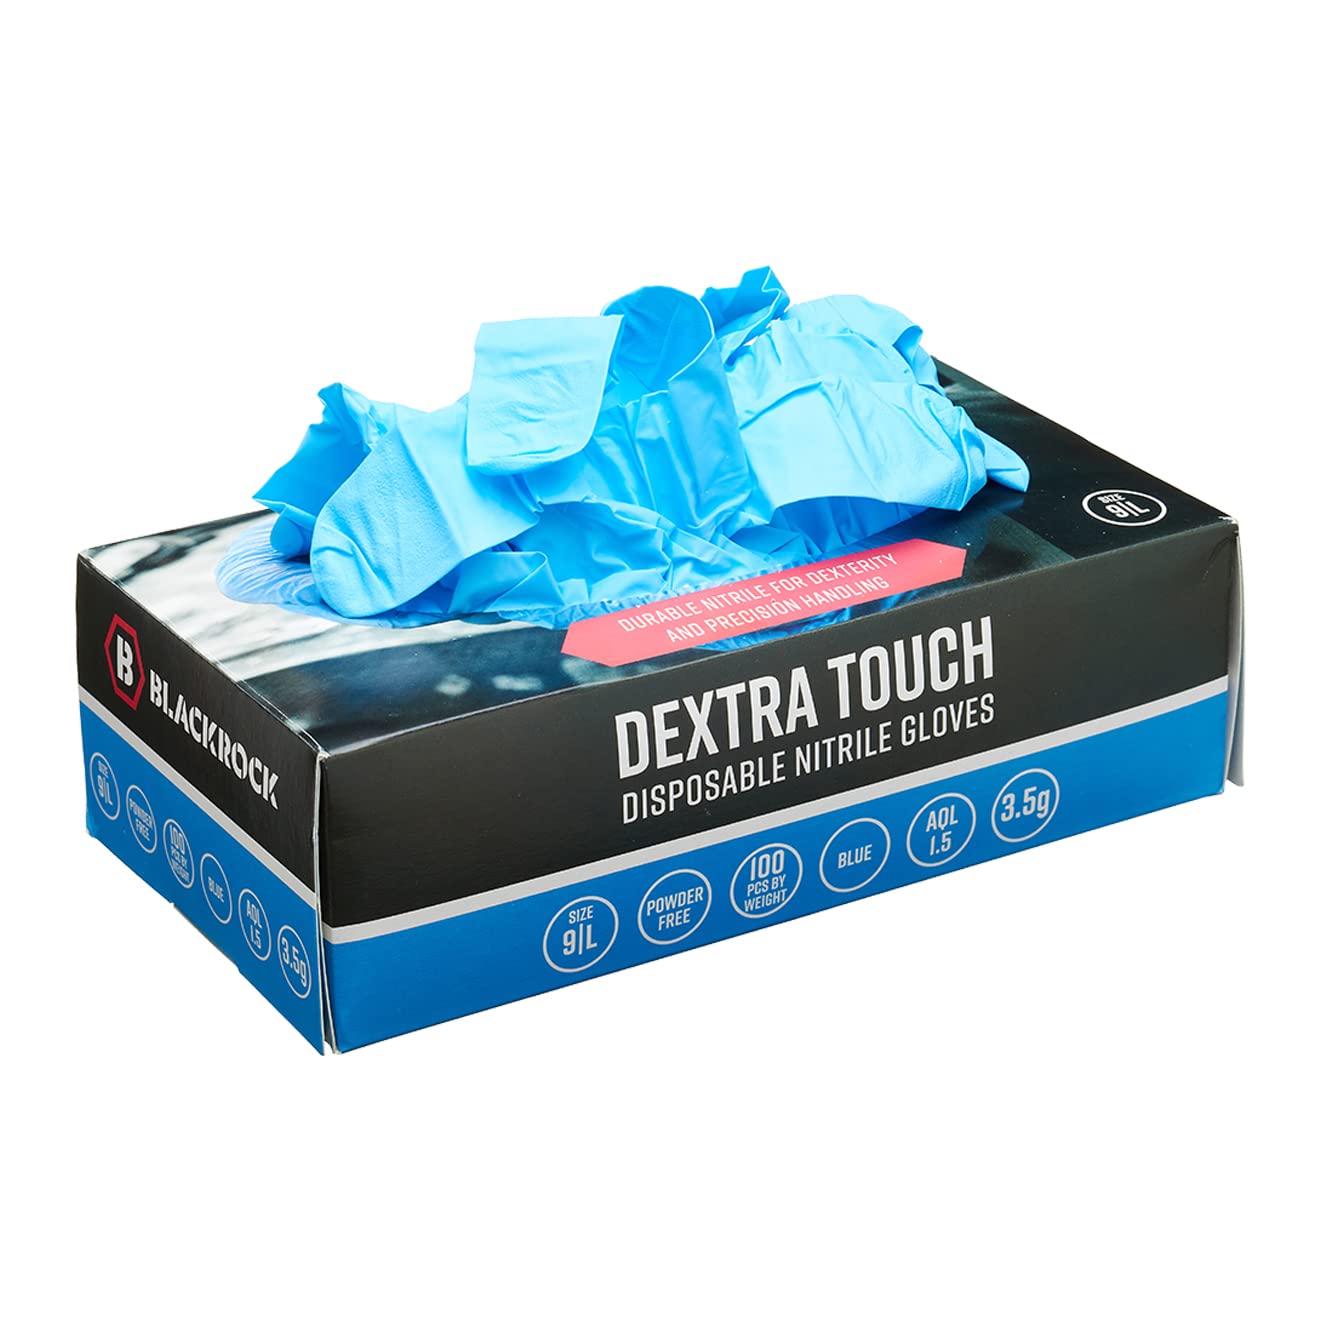 Blackrock Dextra Touch Disposable Nitrile Gloves Medium (100)